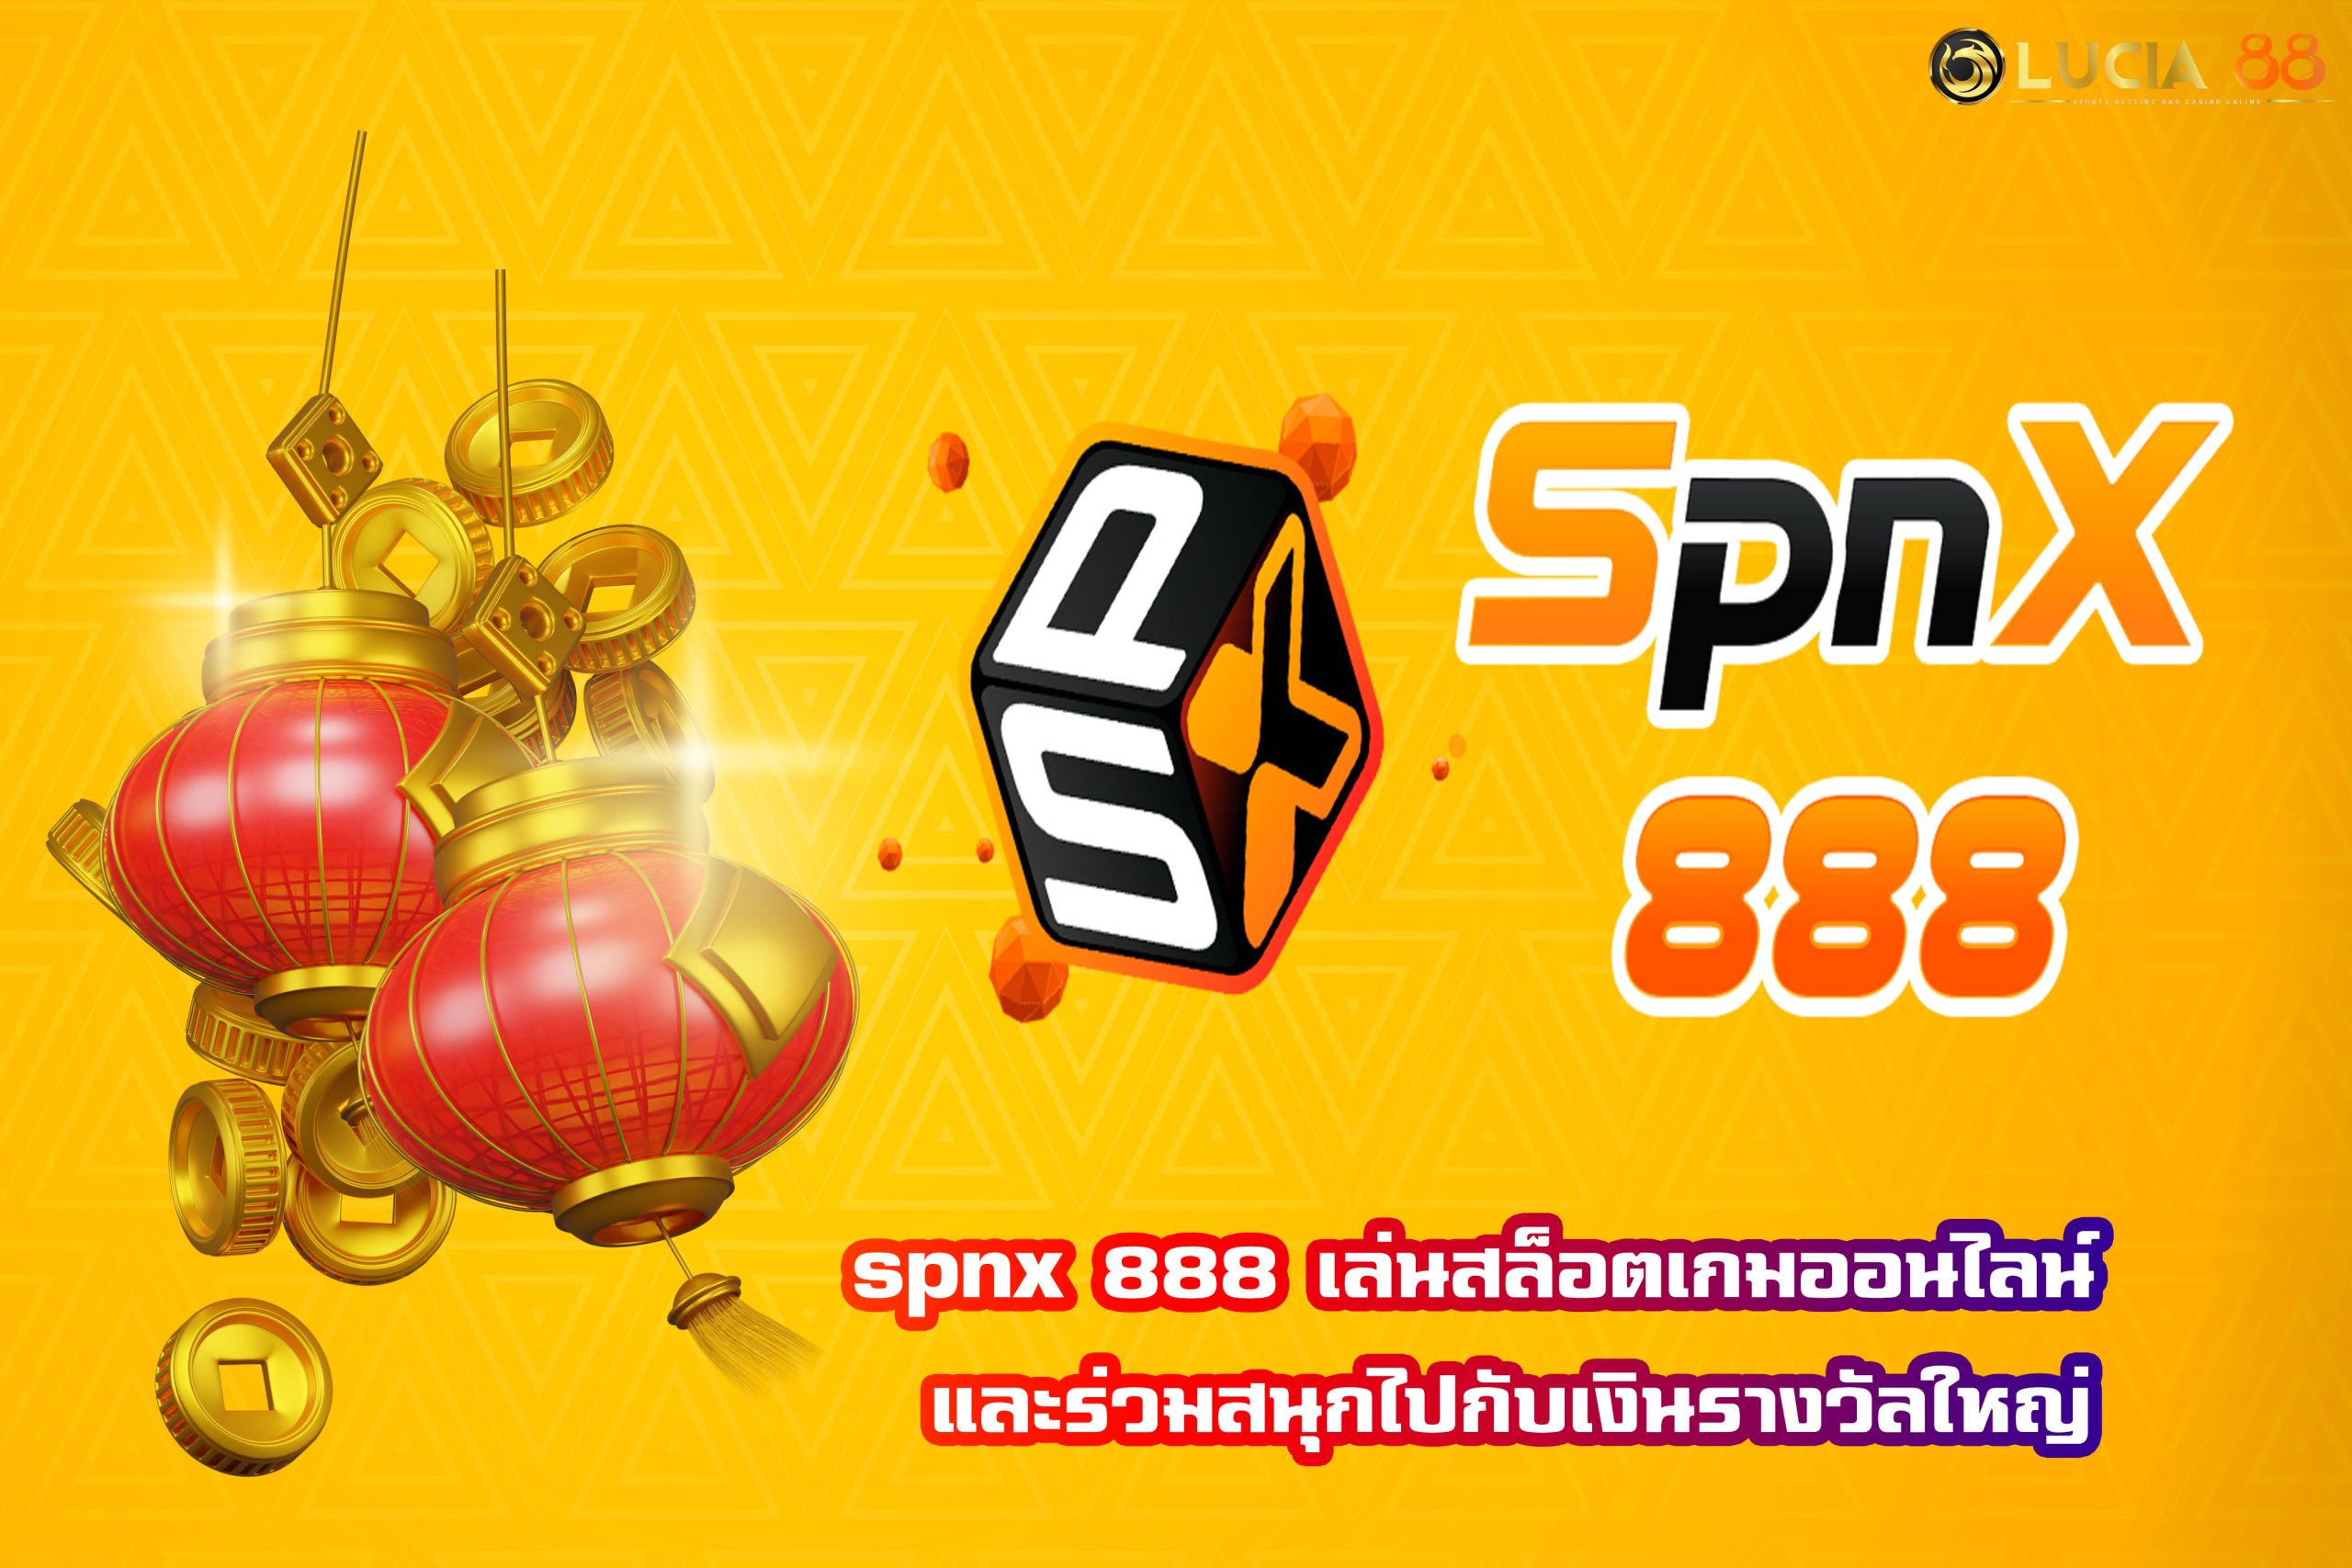 spnx 888 เล่นสล็อตเกมออนไลน์  และร่วมสนุกไปกับเงินรางวัลใหญ่